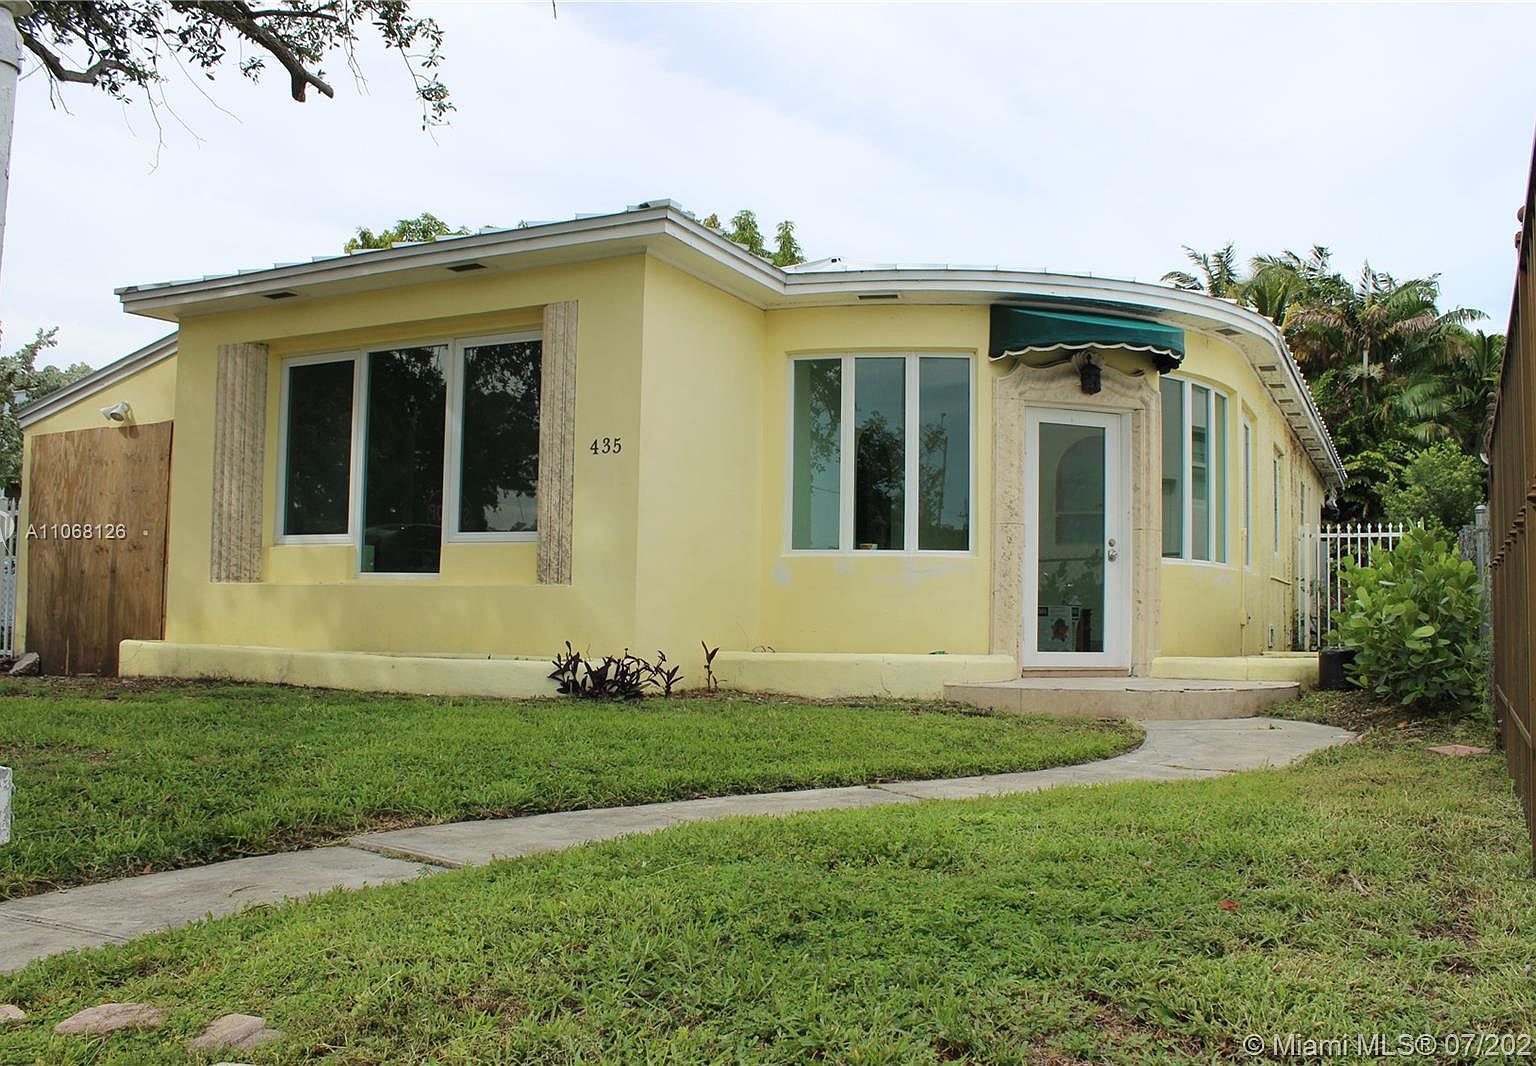 In North Coconut Grove - Miami Real Estate - 10 Homes For Sale - Zillow